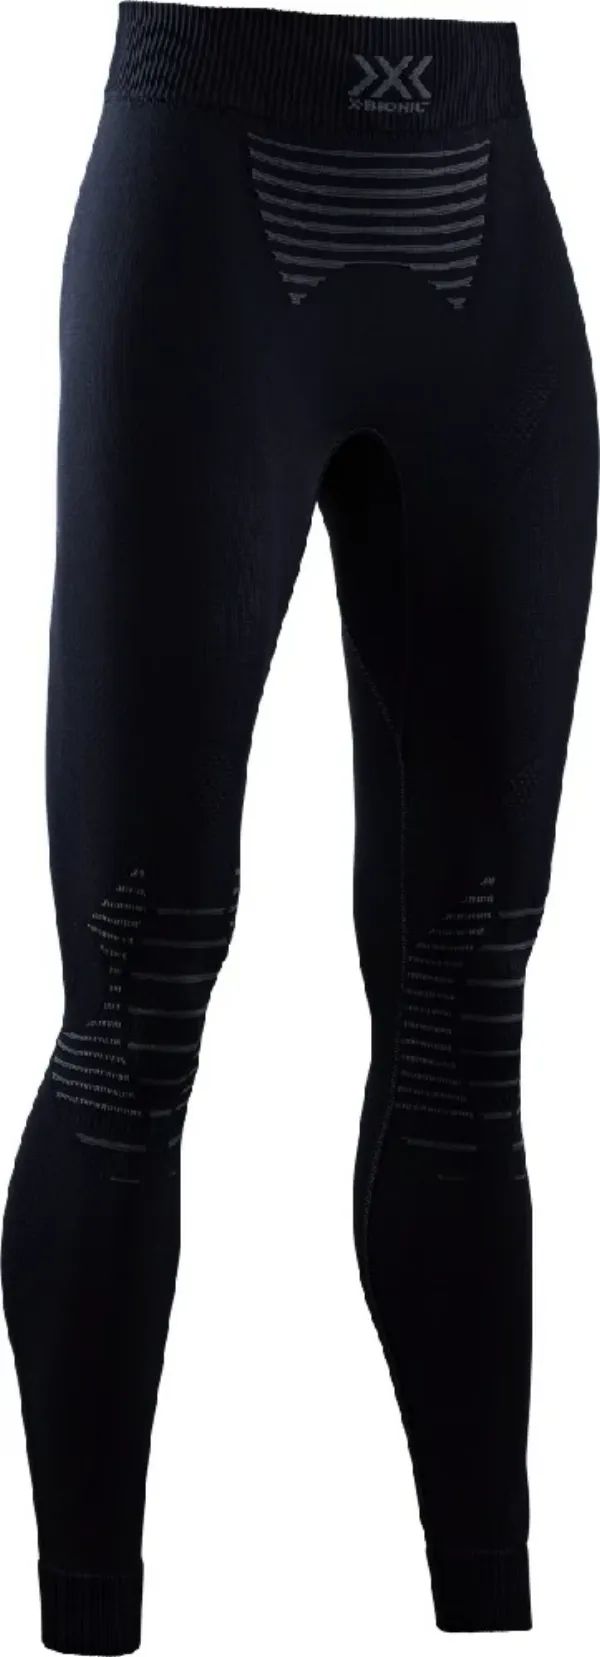 X Bionic Women's Underpants X-Bionic Invent 4.0 Run Black/Charcoal